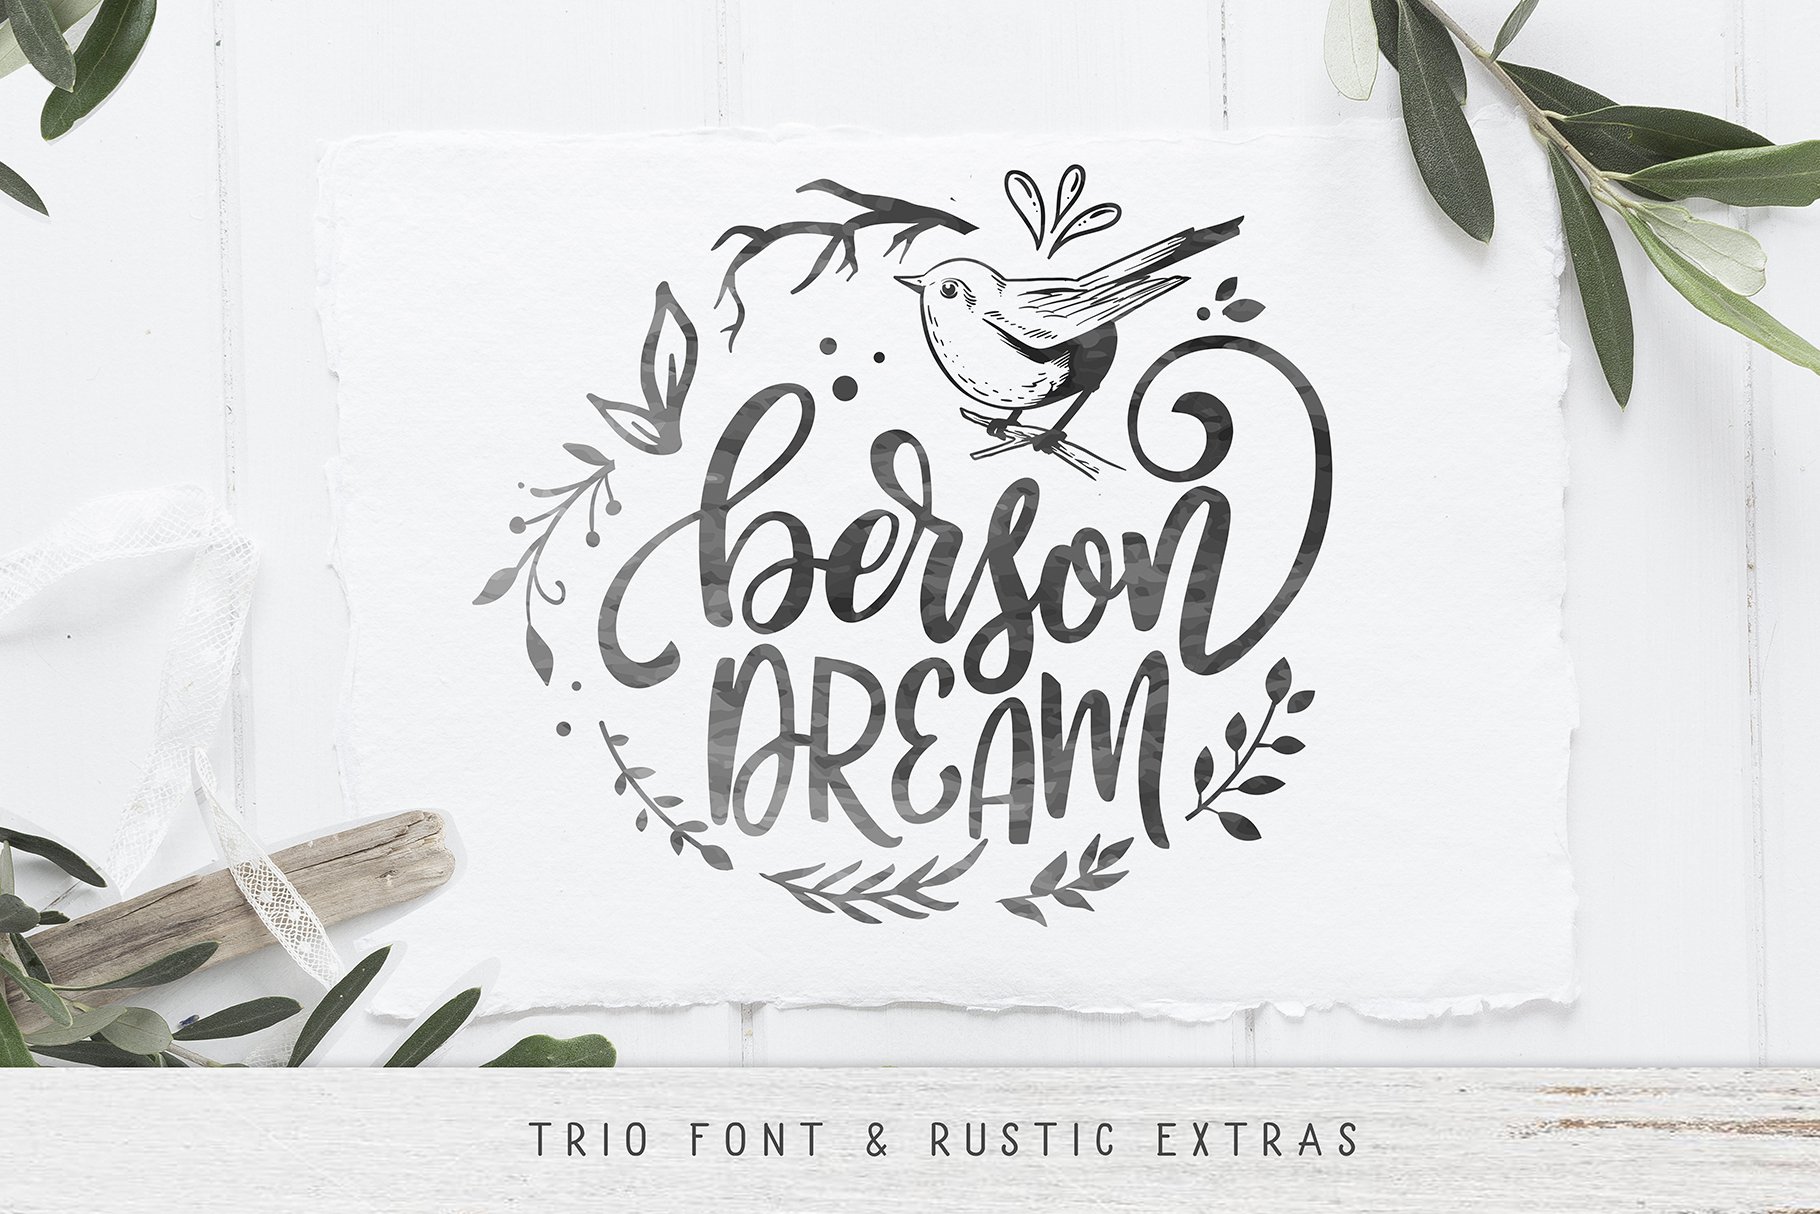 Berson Dream Font TRIO and extras cover image.